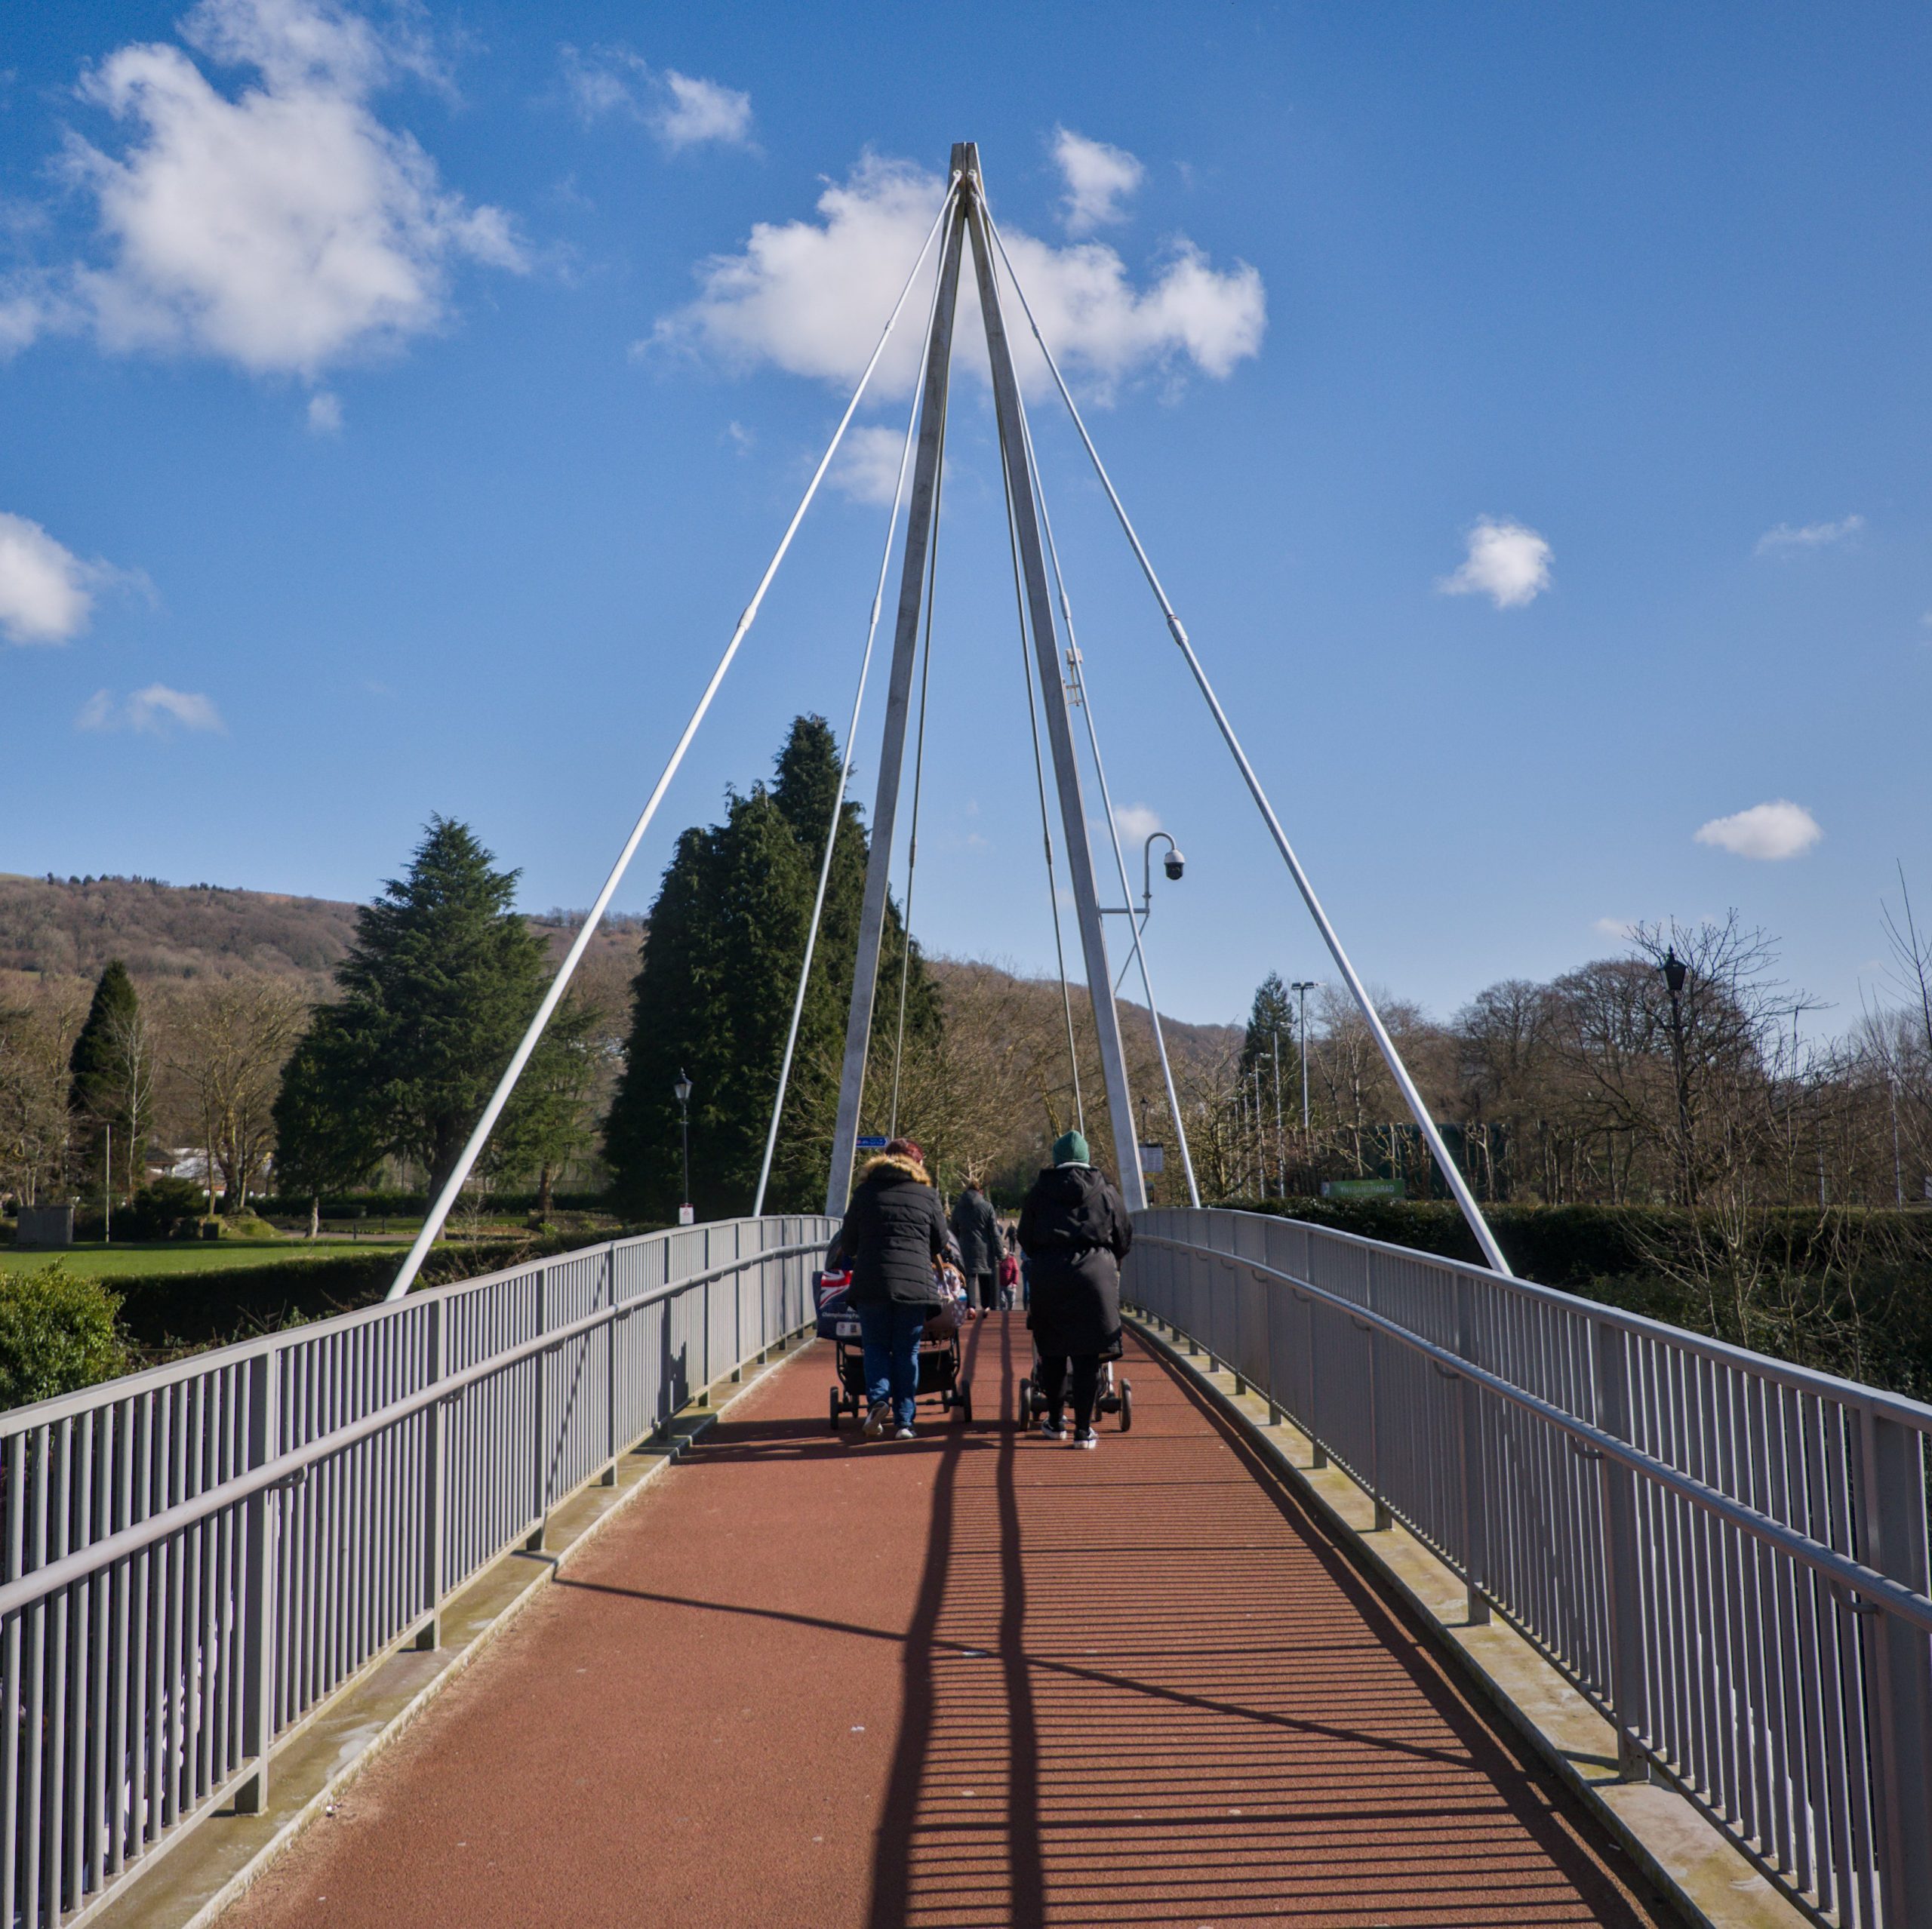 People walking across a modern suspension bridge on a clear day.